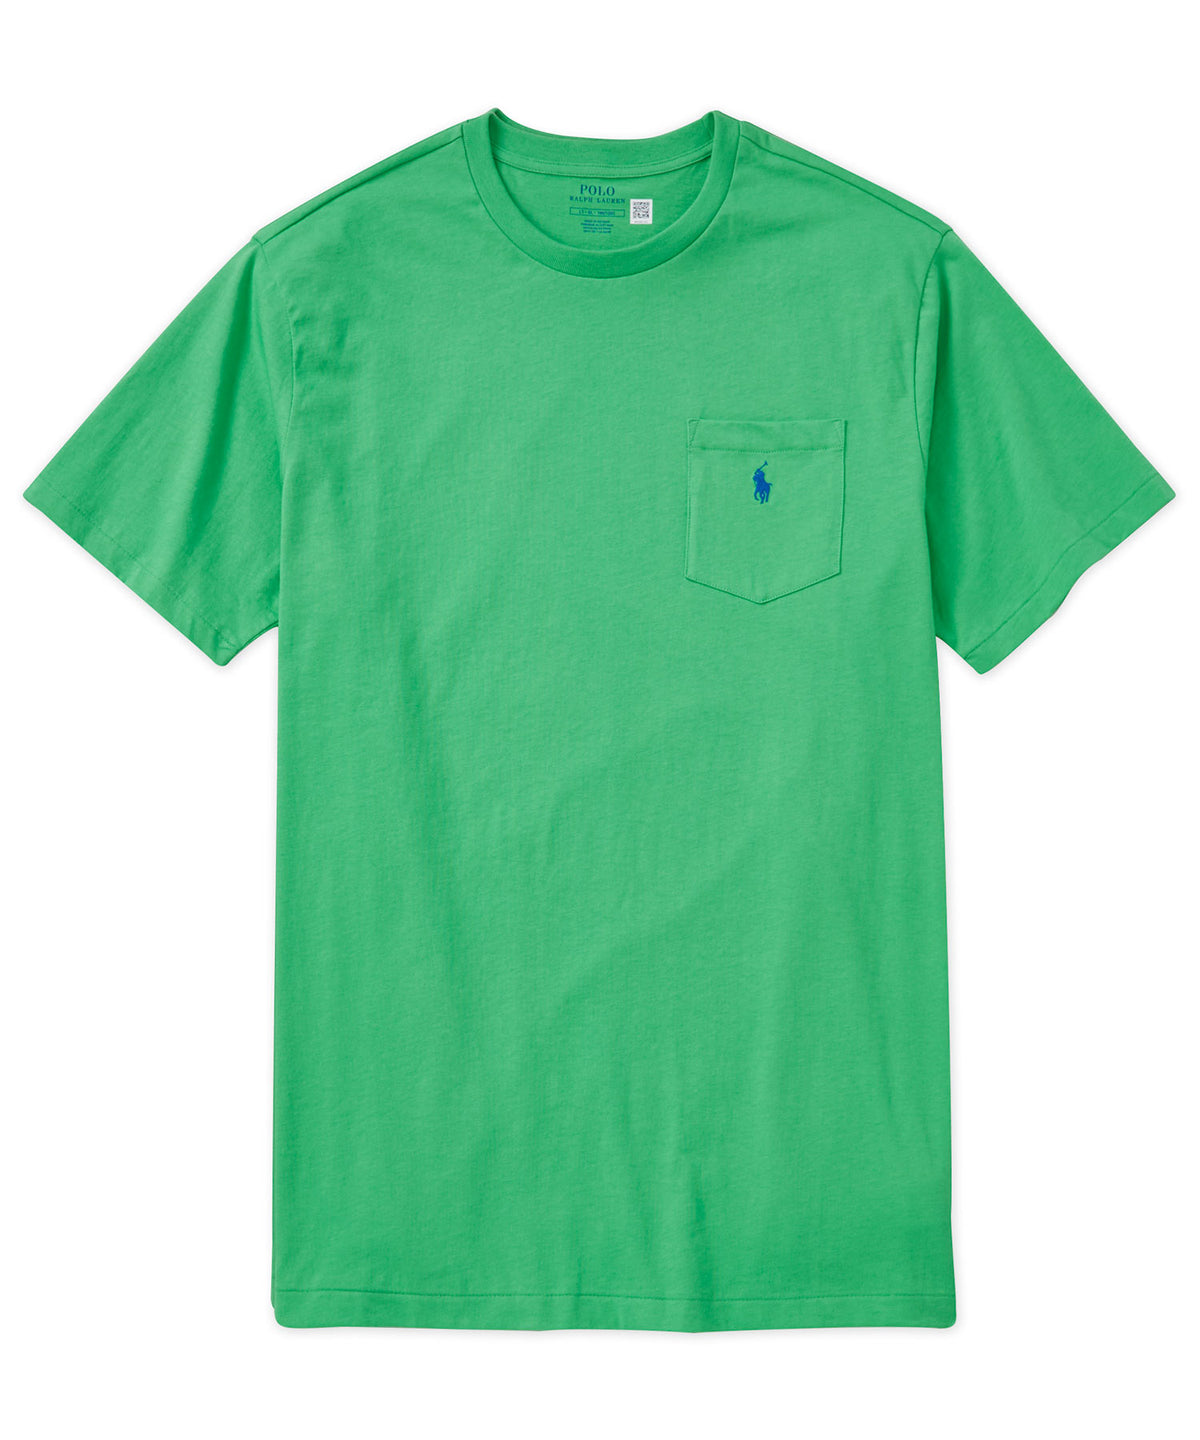 Polo Ralph Lauren Short Sleeve Solid Pocket Crewneck Tee Shirt, Big & Tall